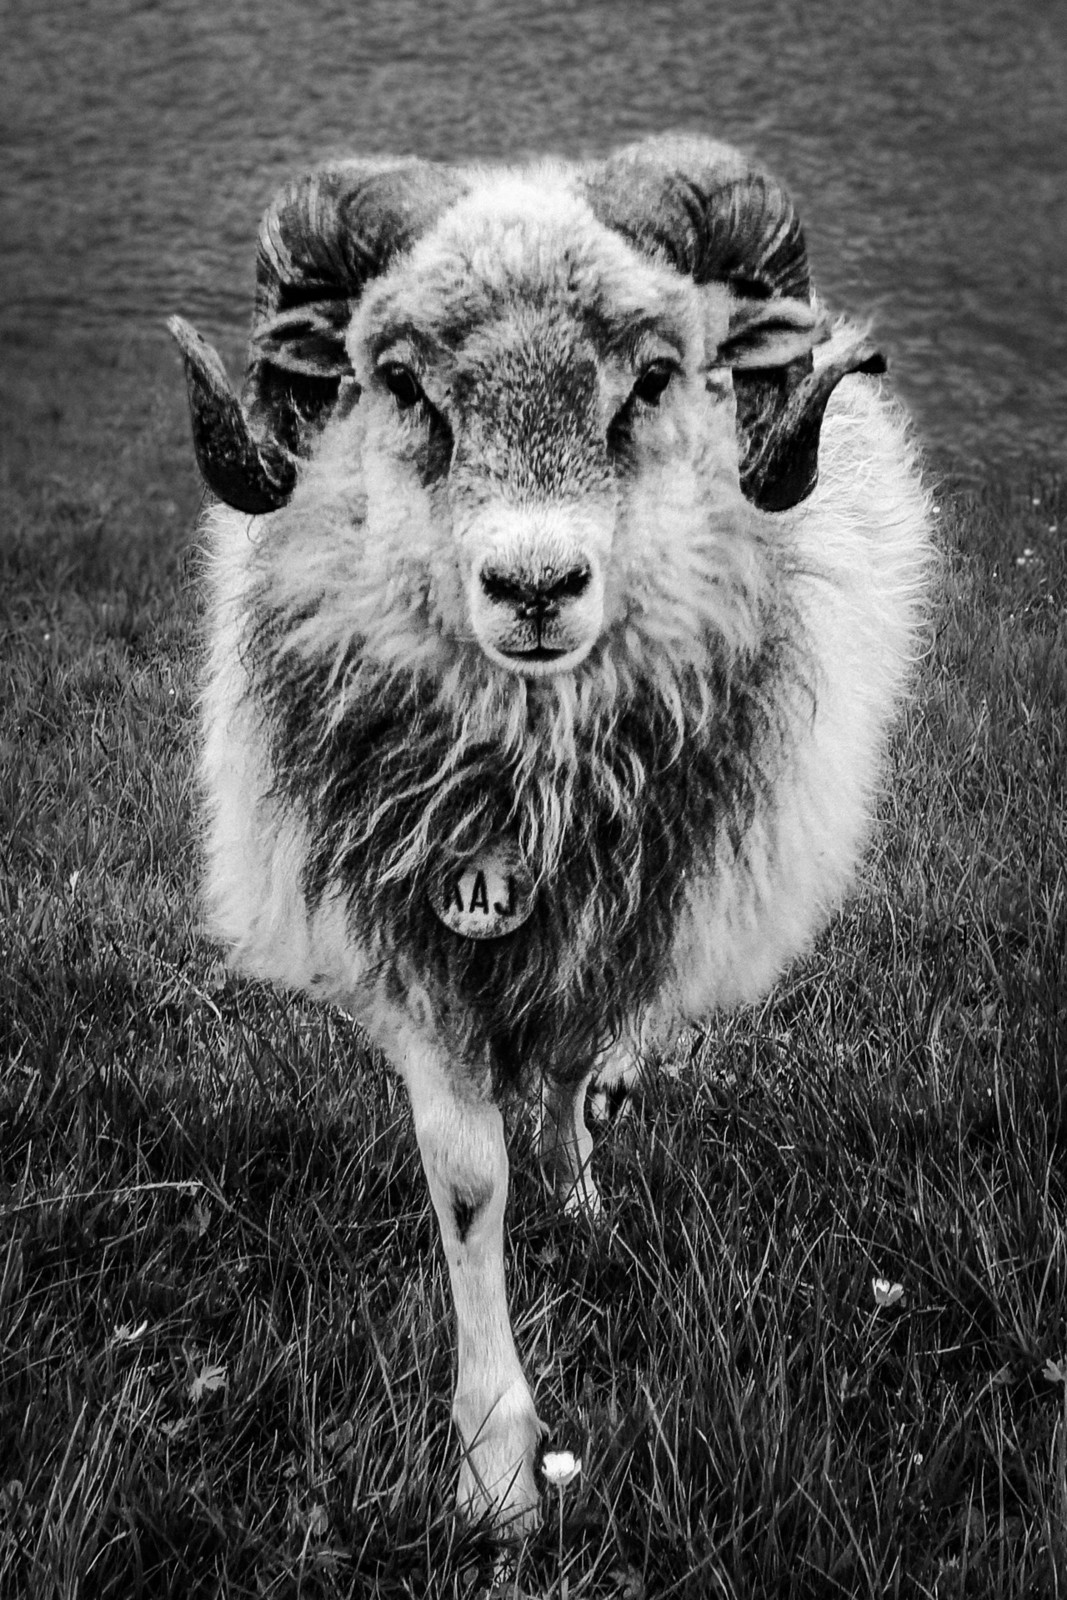 An aggressive sheep on the Faroe Islands